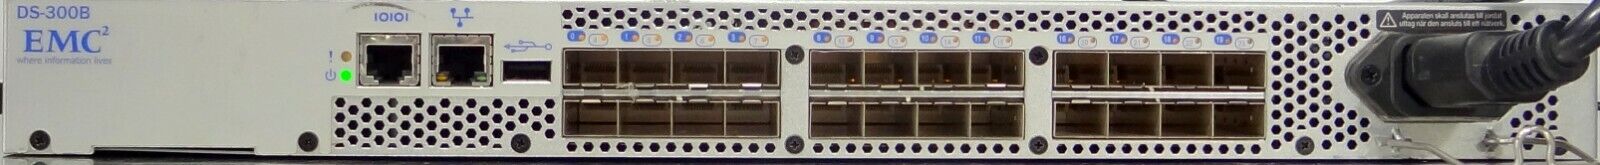 EMC2 DS-300B 24-Port Managed Switch Brocade 300 100-652-065